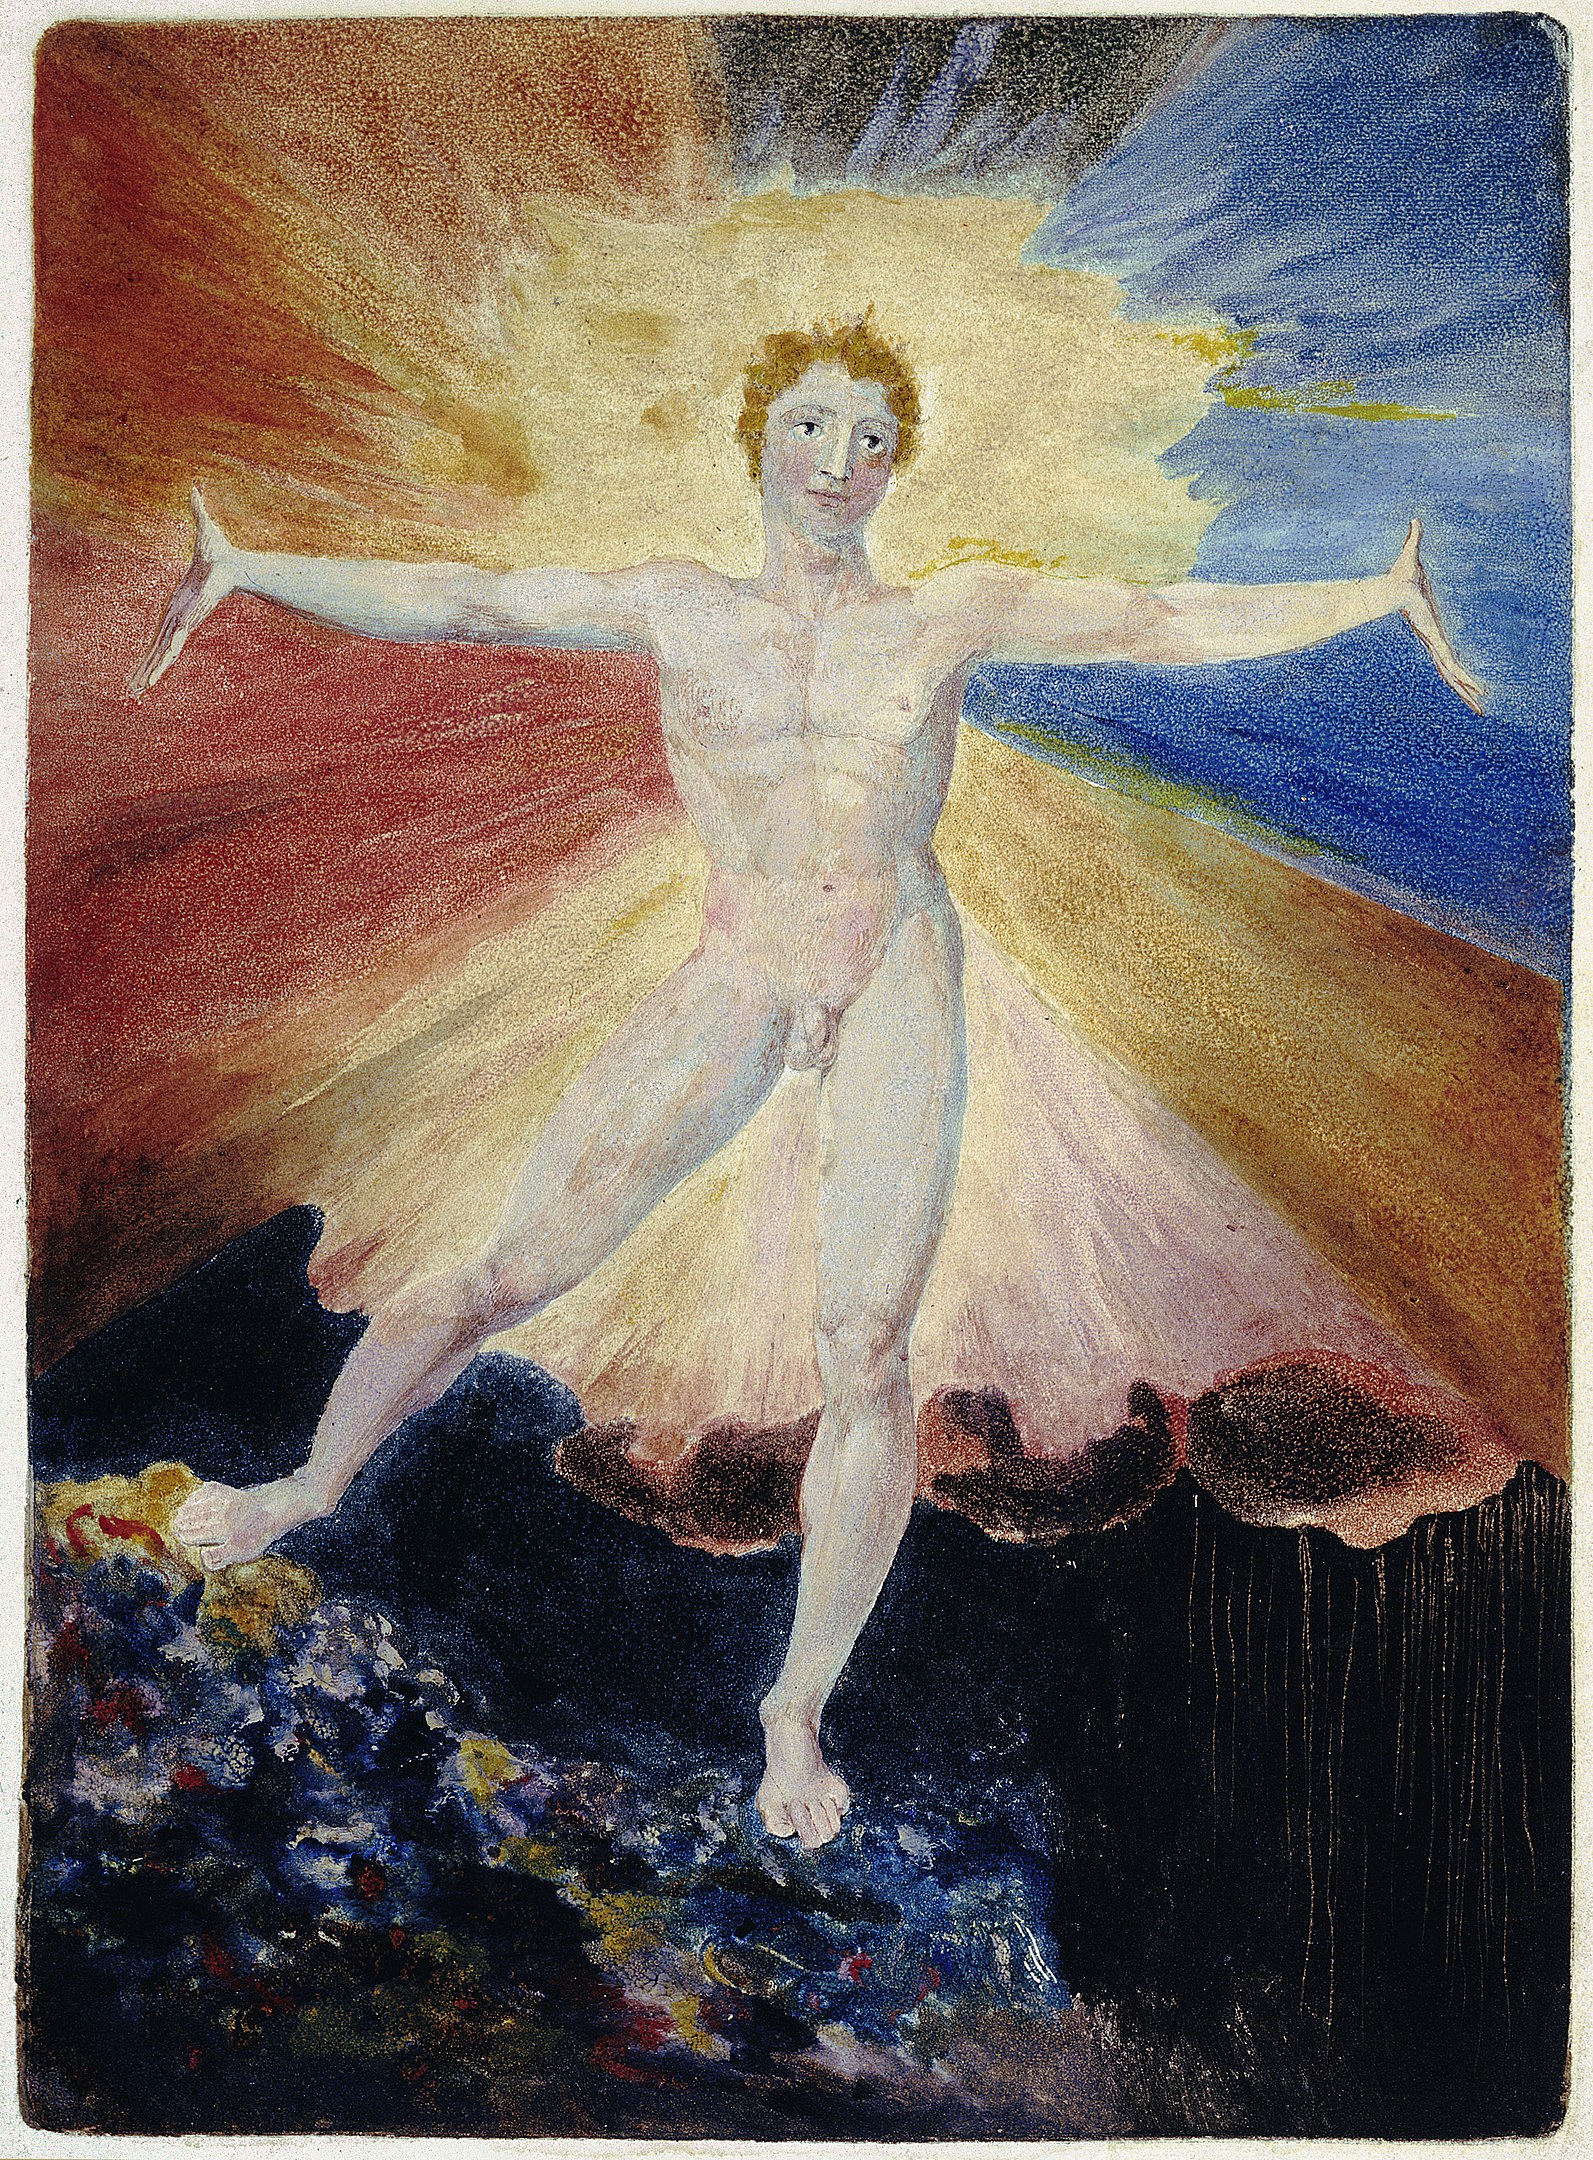 Albion Yükseliyor by William Blake - 1794-1796 - 27,2 x 20 cm British Museum